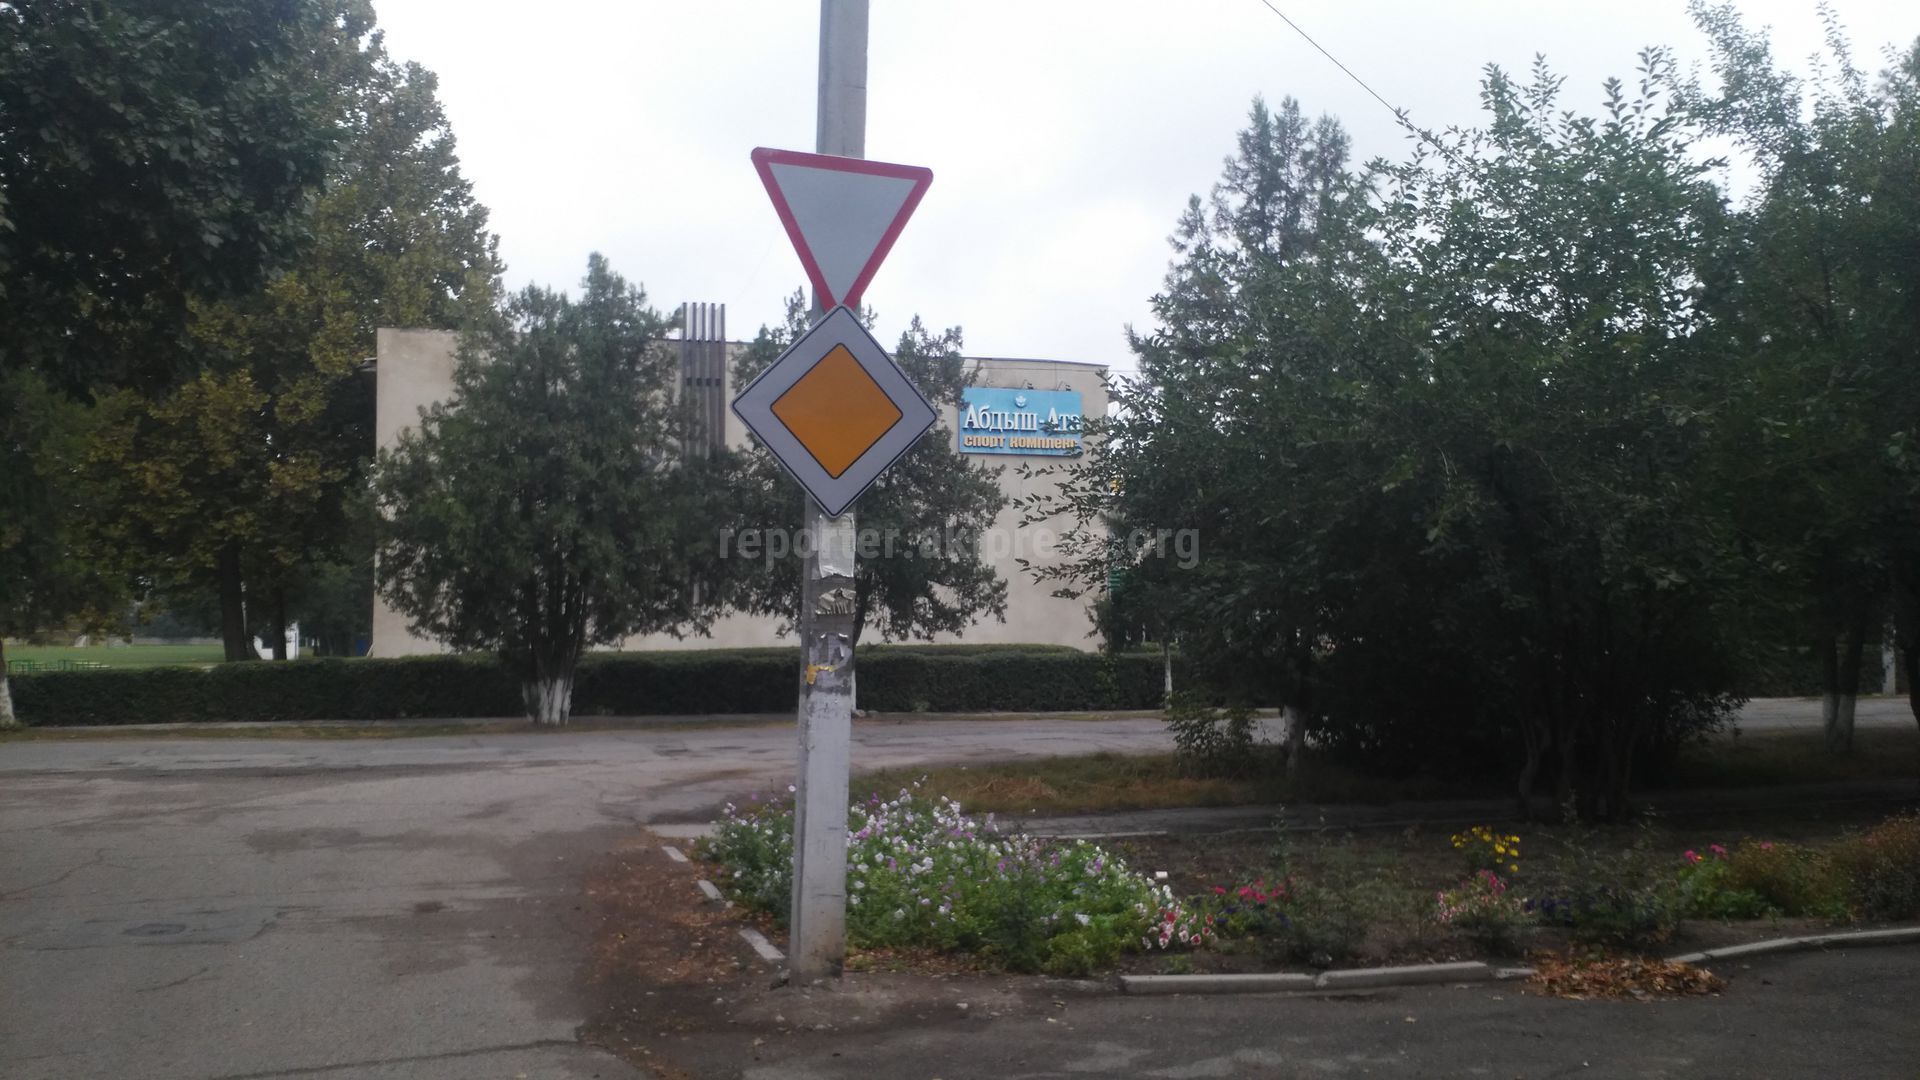 Знаки противоречат друг другу. Дорожные знаки противоречат друг другу. Дорожные знаки в Шелехове. Город кант указатель. Два знака противоречат друг другу.